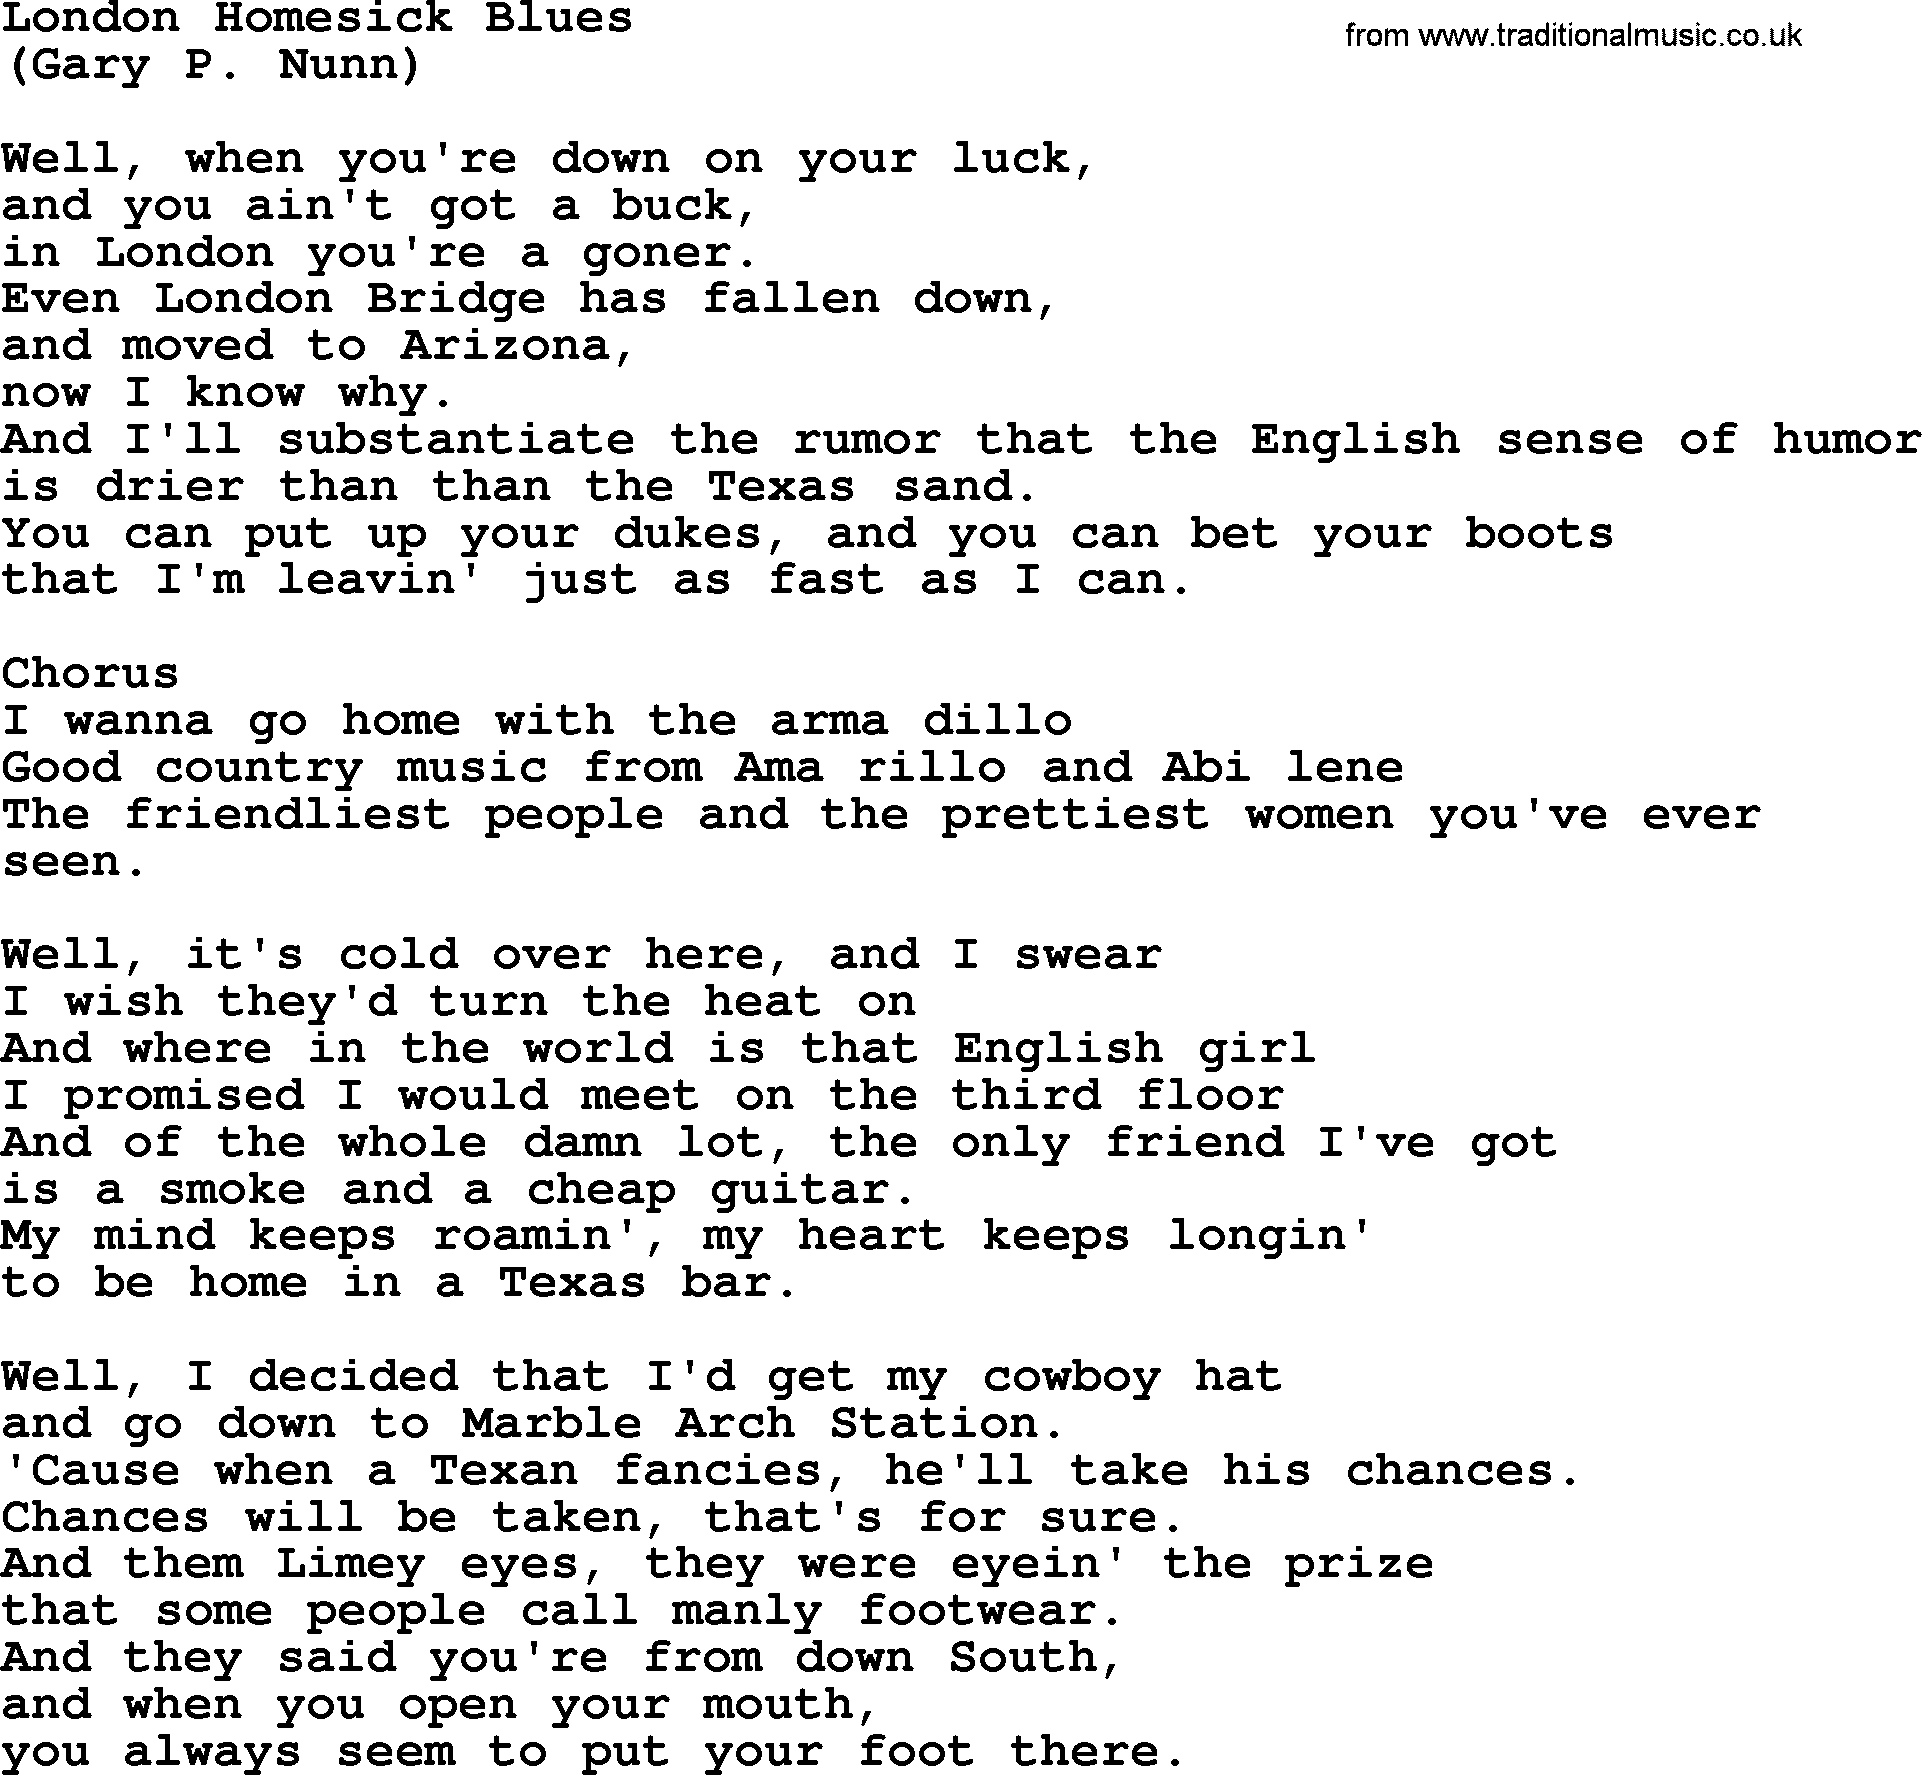 The Byrds song London Homesick Blues, lyrics